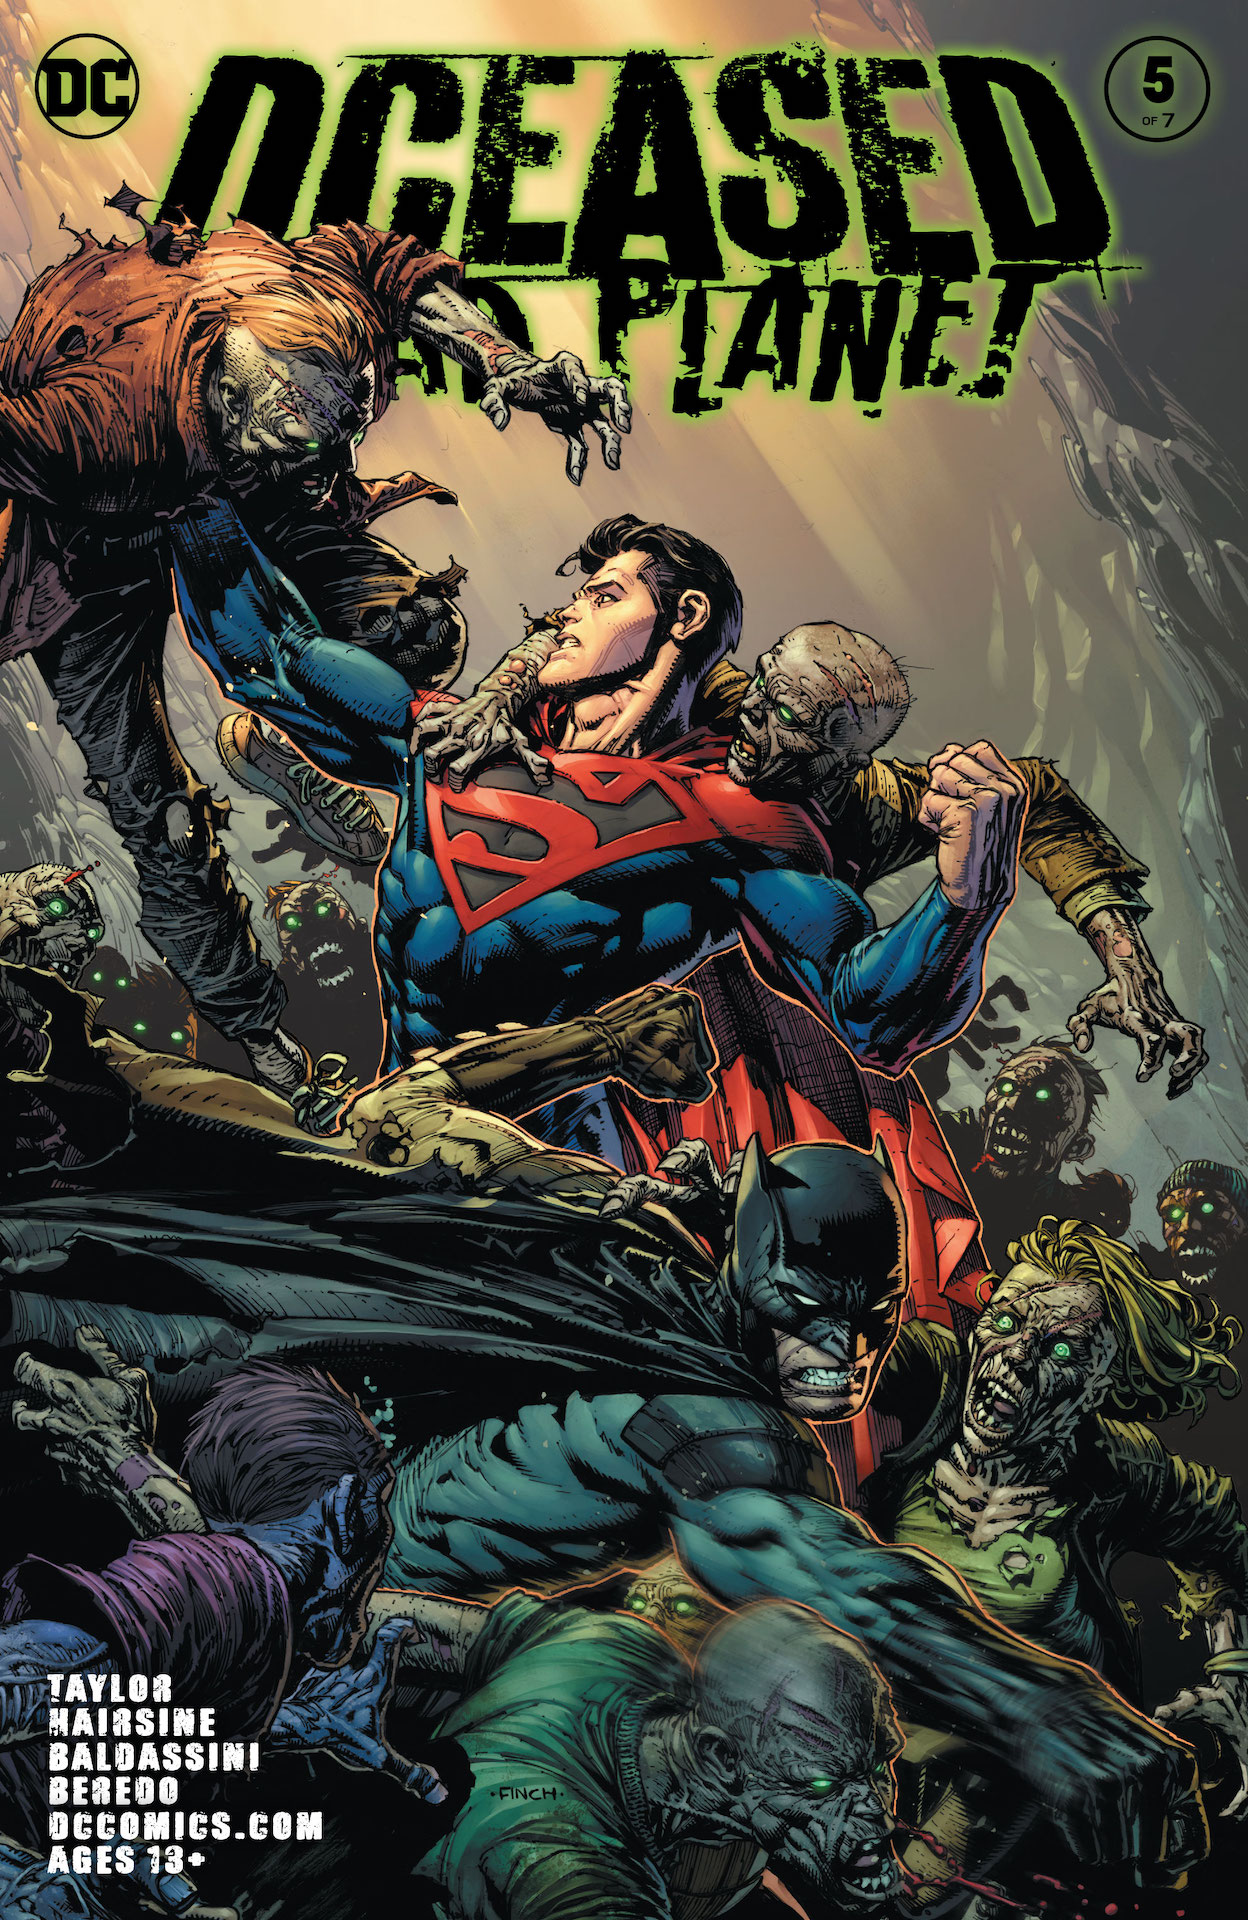 DC Preview: DCeased: Dead Planet #5